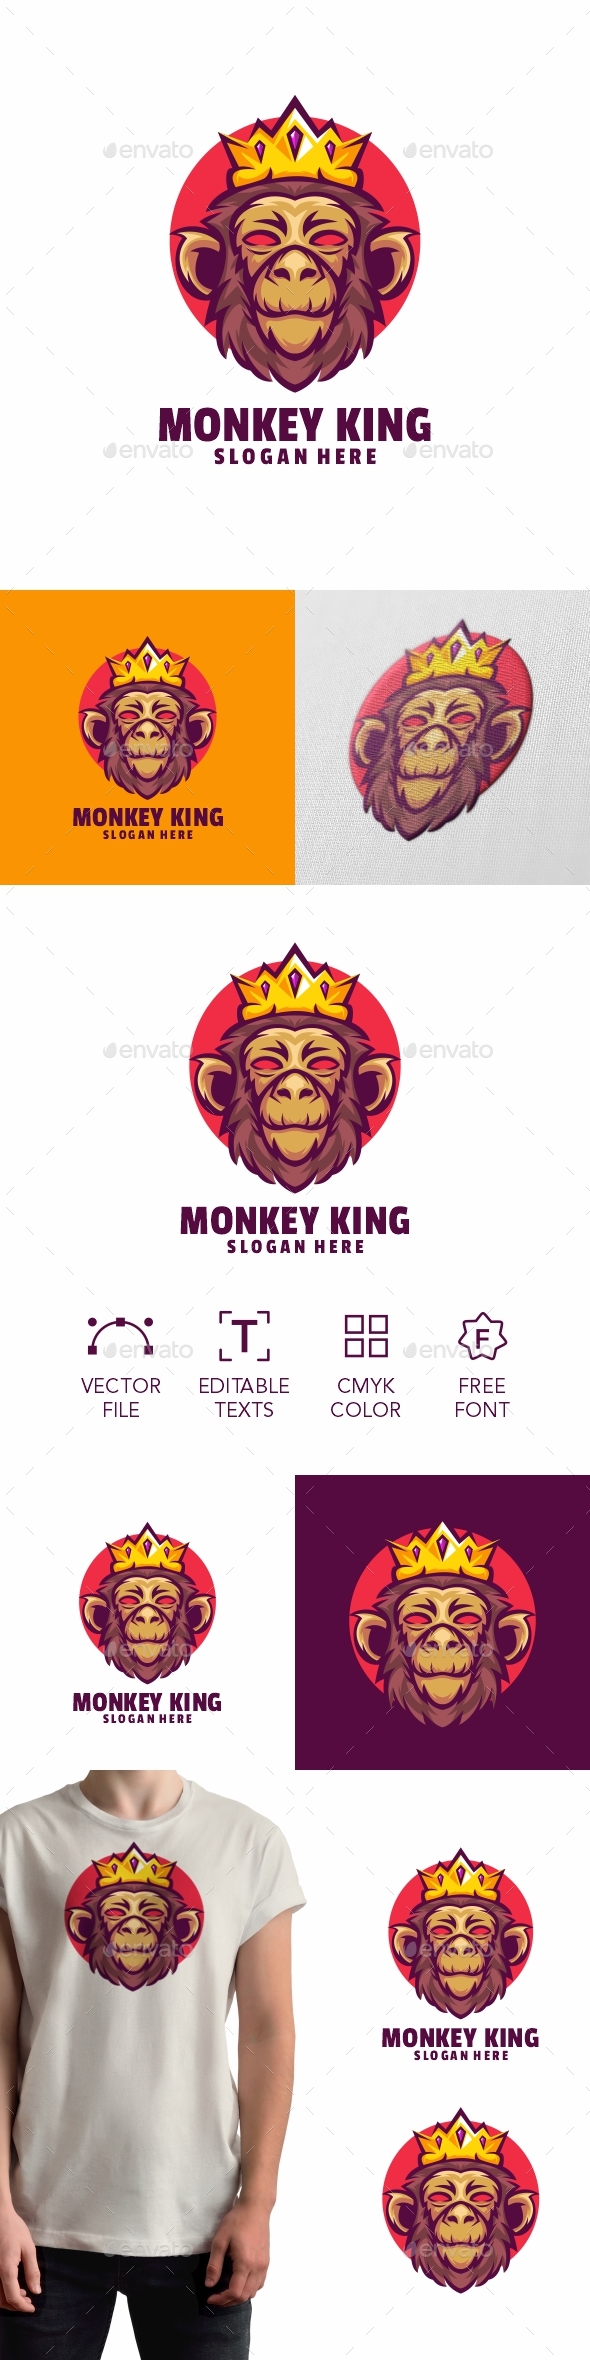 monkey king logo design template